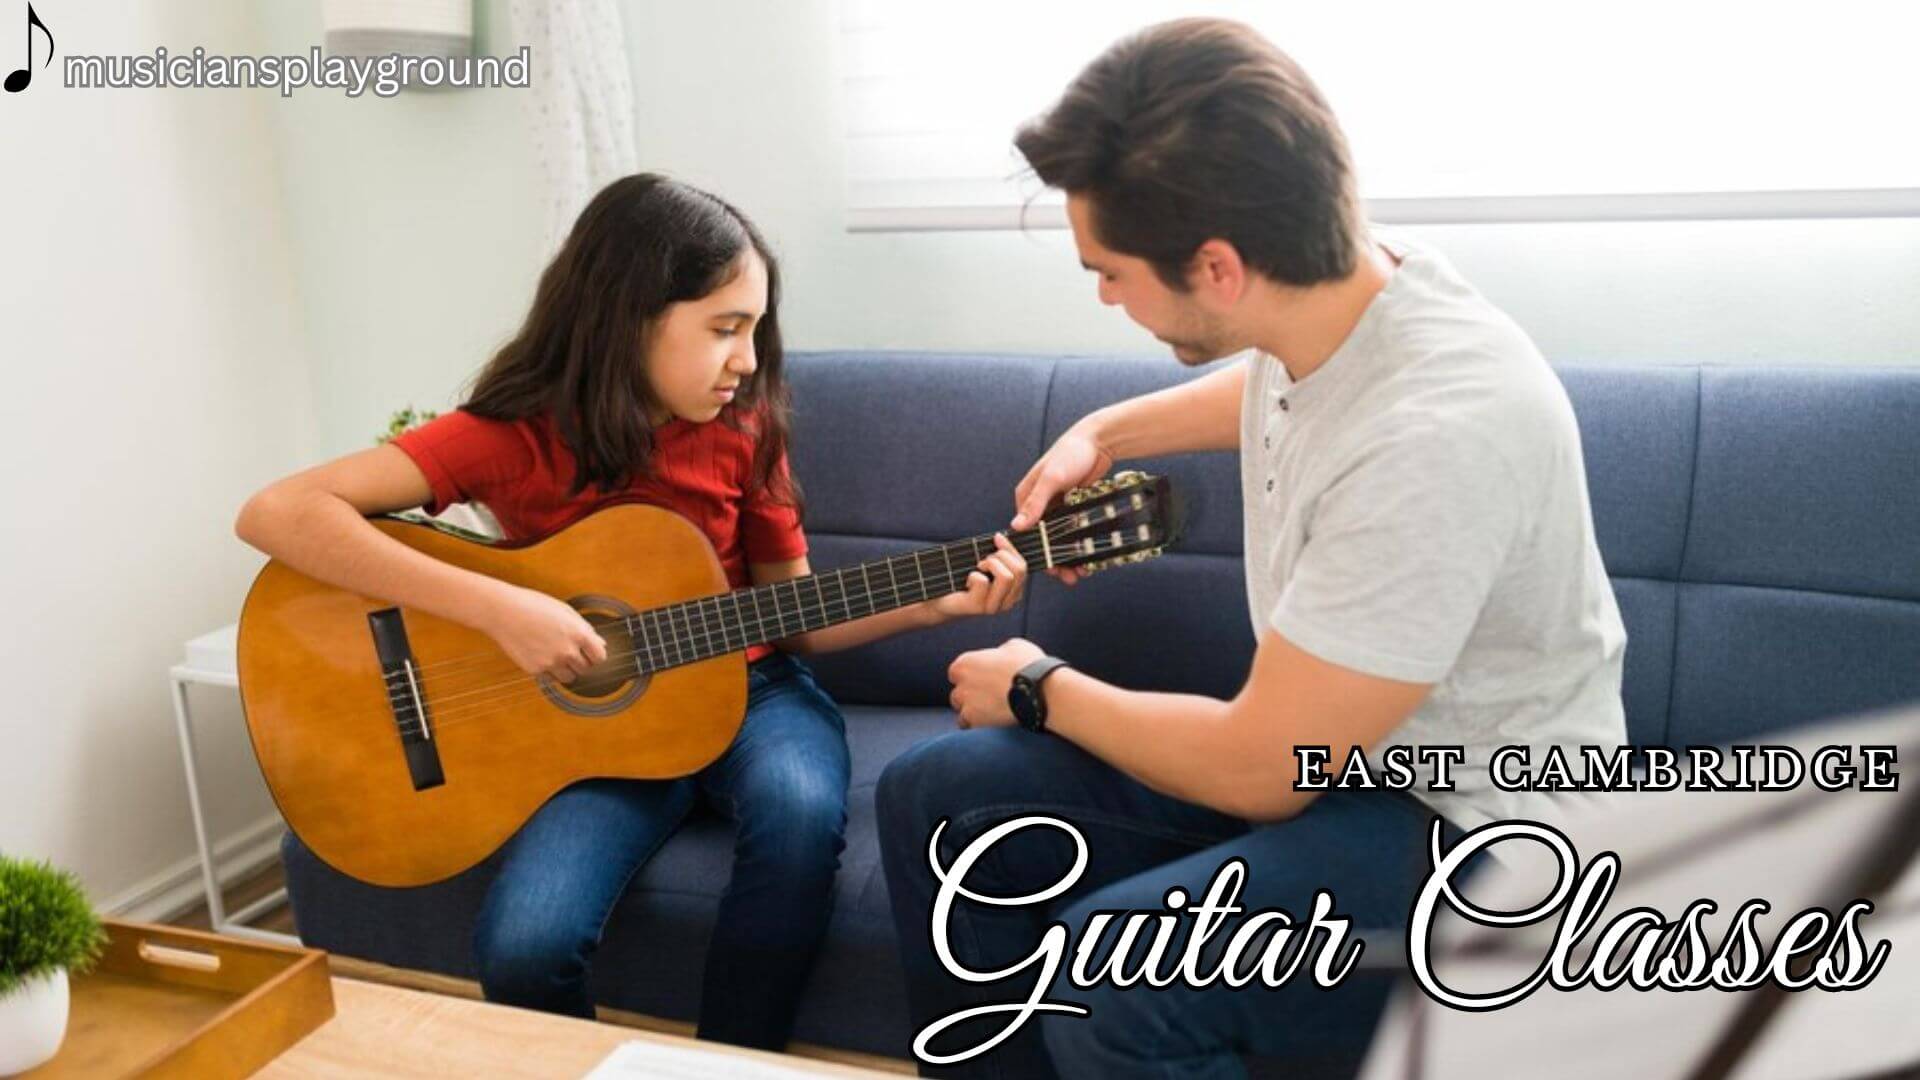 Welcome to Guitar Classes in Cambridge, Massachusetts